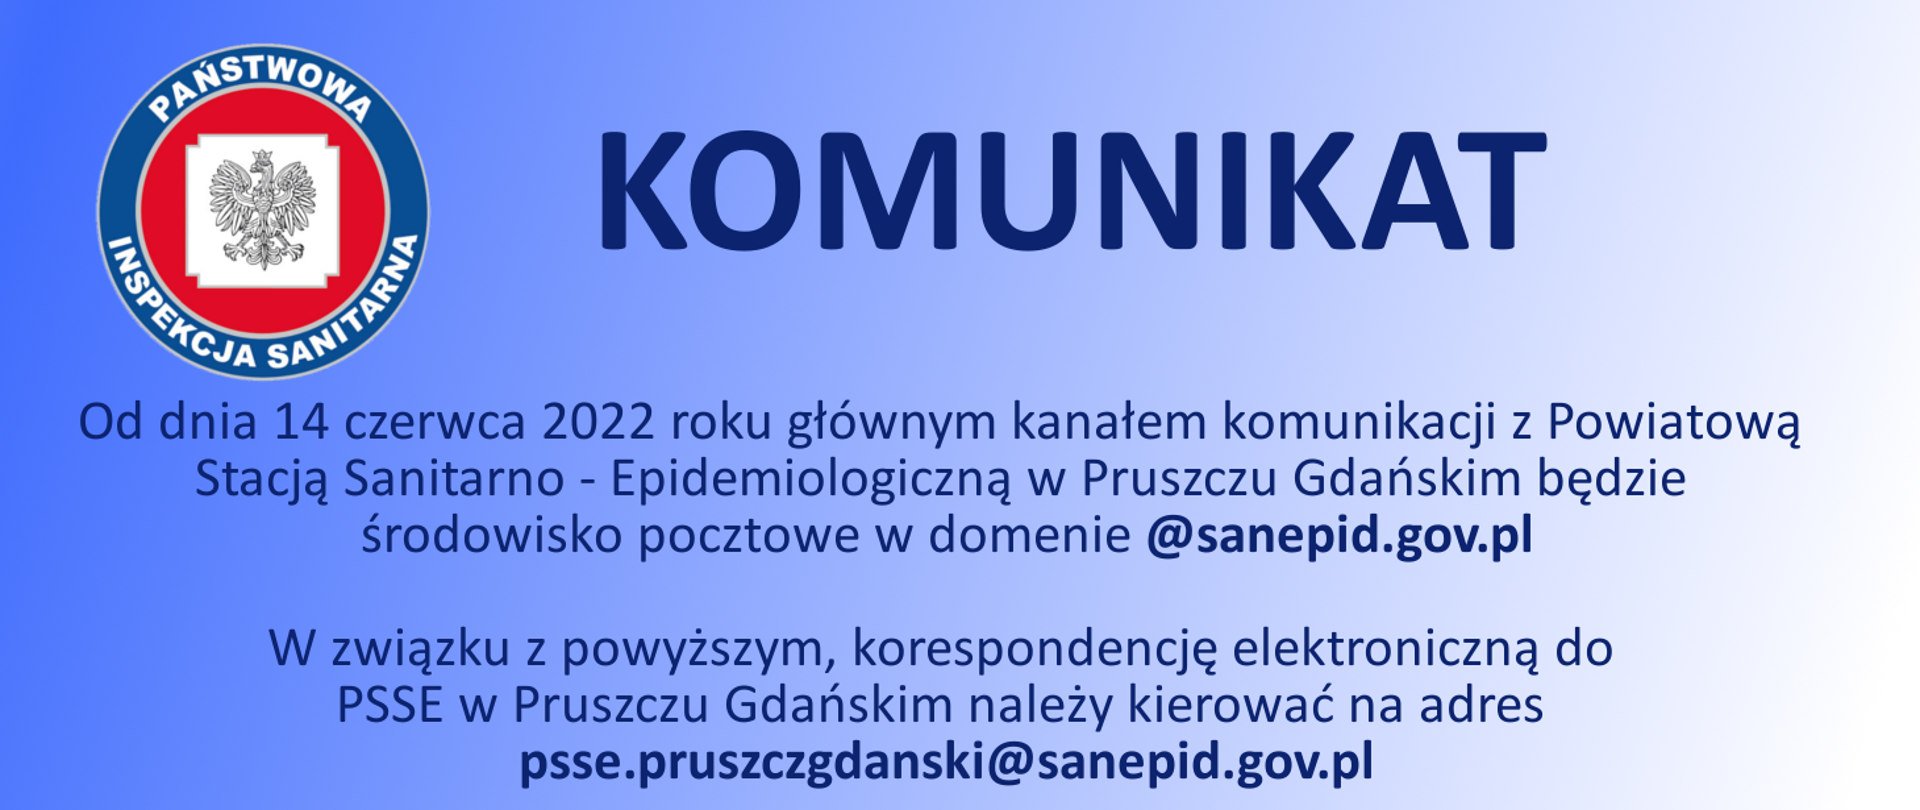 Komunikat o zmianie domeny pocztowej na @sanepid.gov.pl